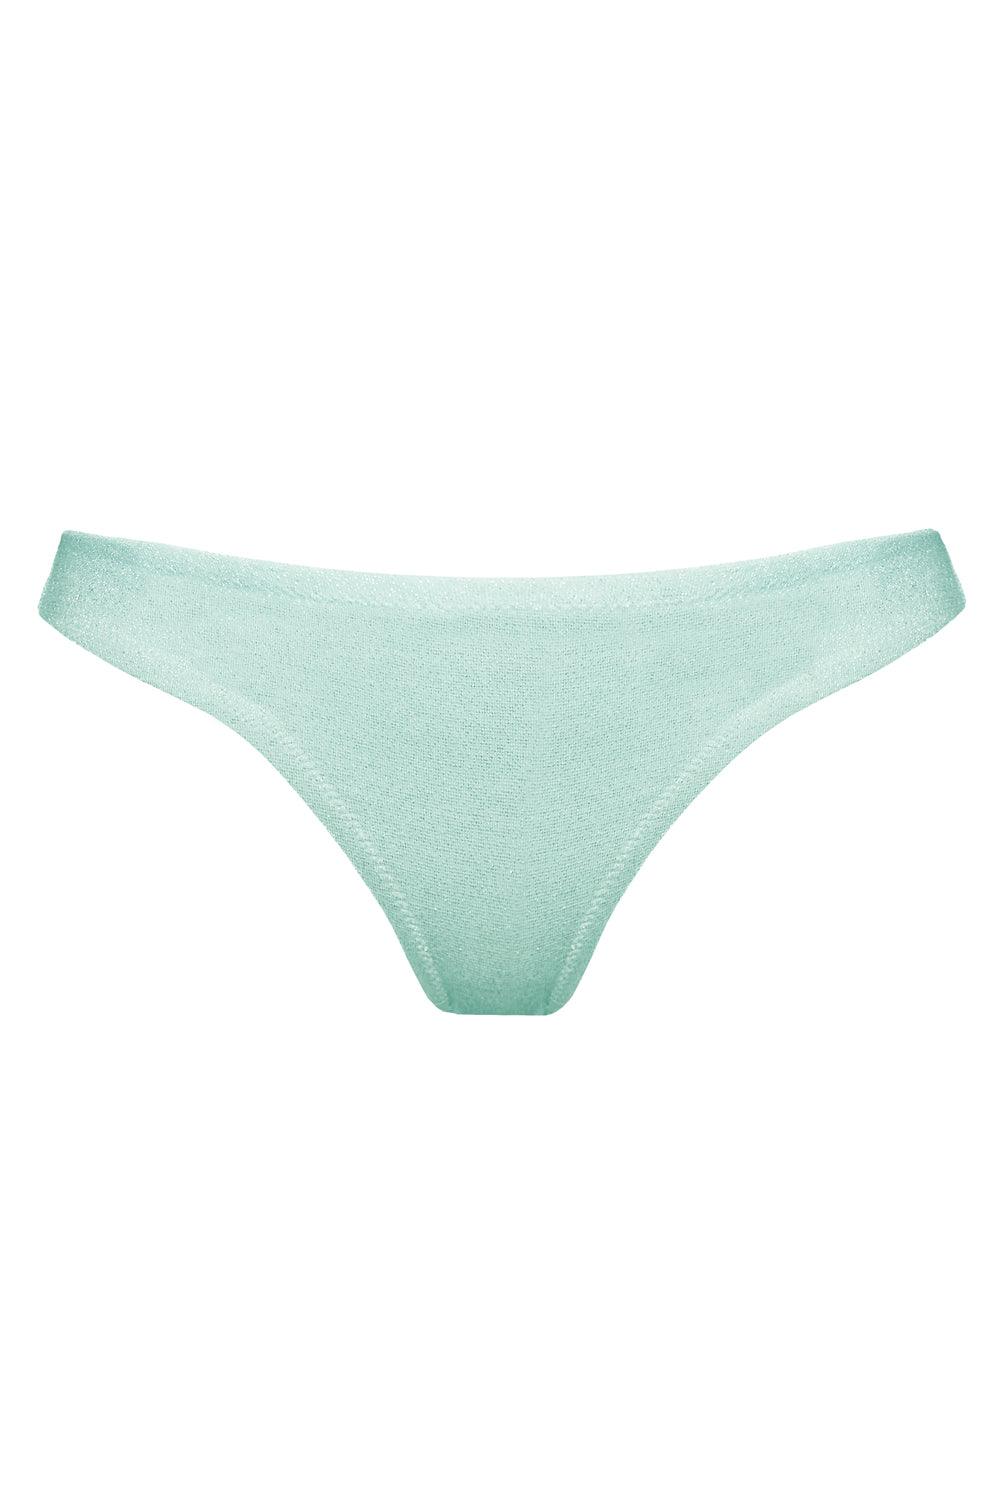 Ariel Mint bikini bottom - Bikini bottom by Love Jilty. Shop on yesUndress